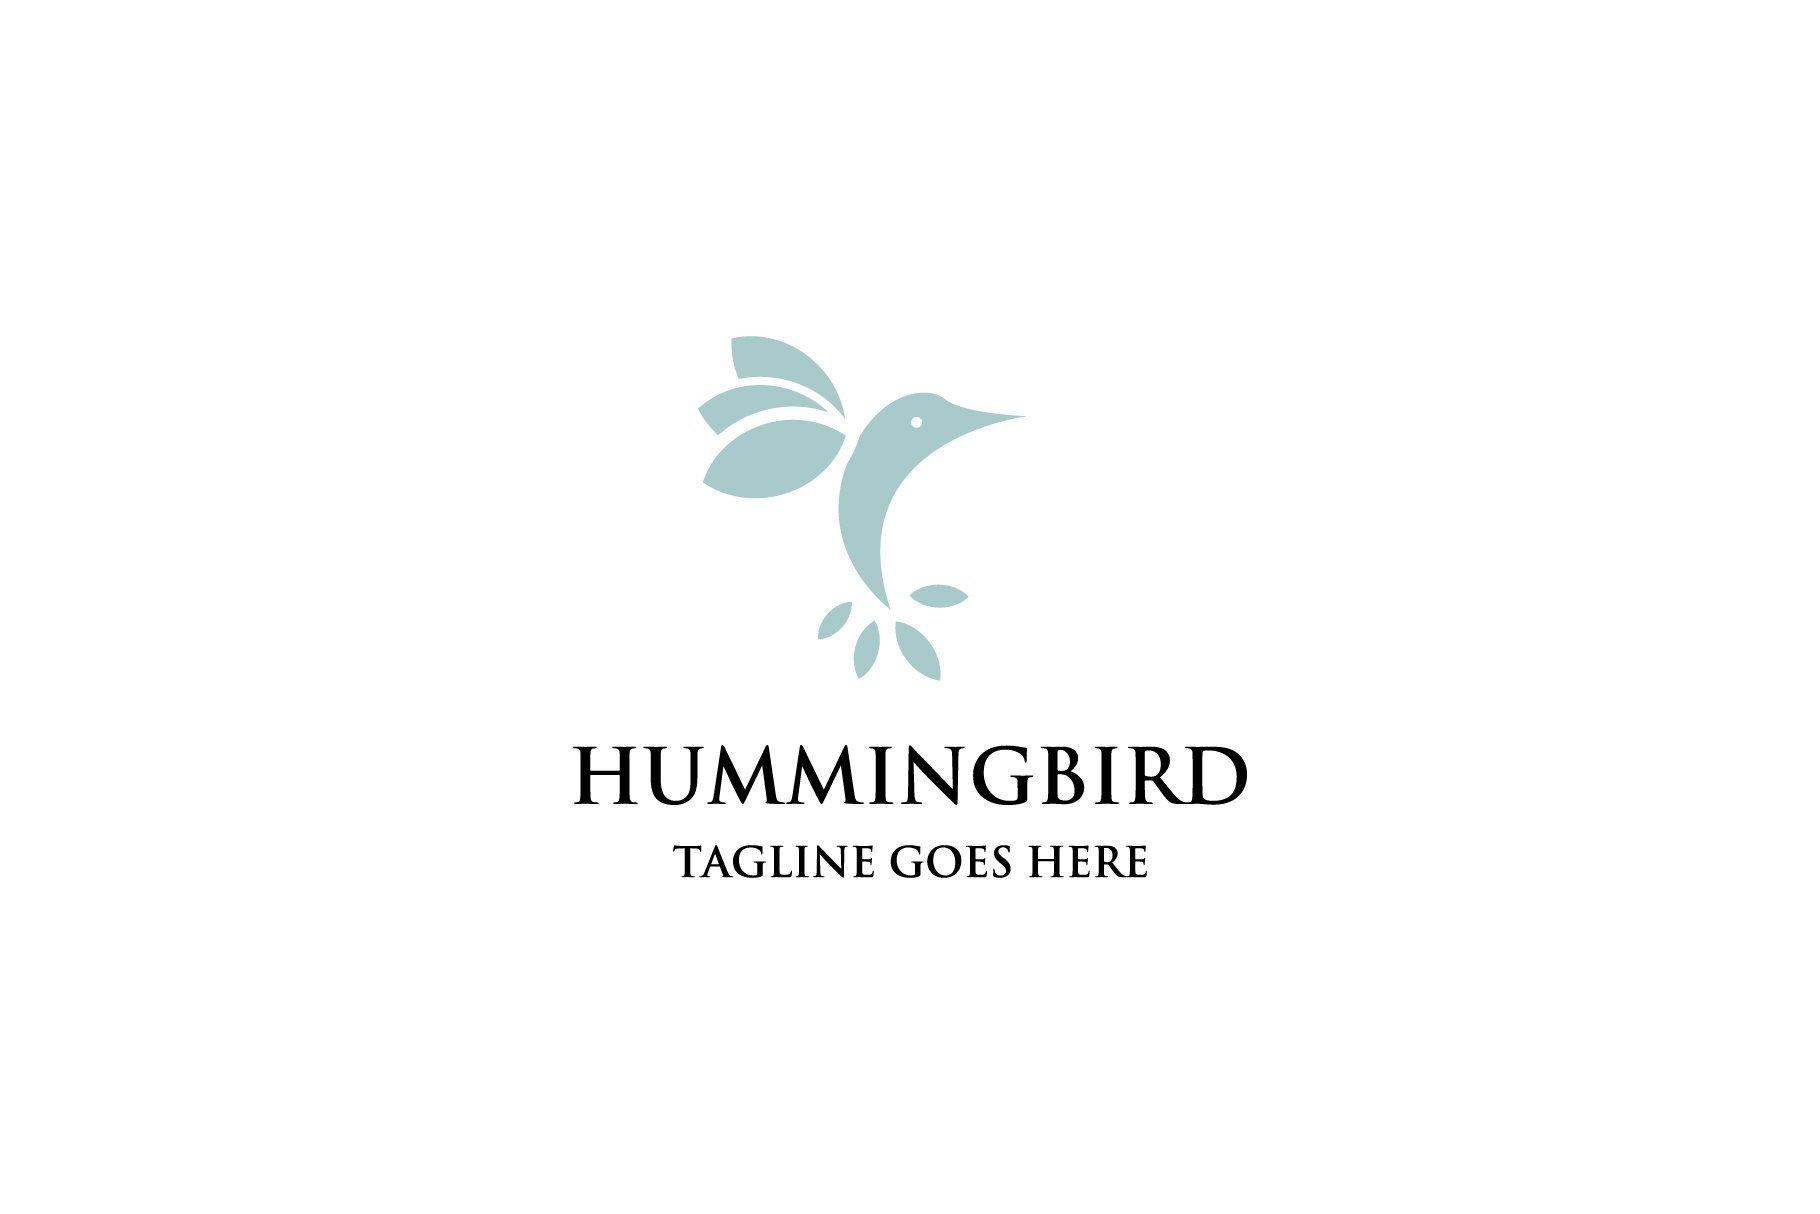 hummingbird logo cover image.